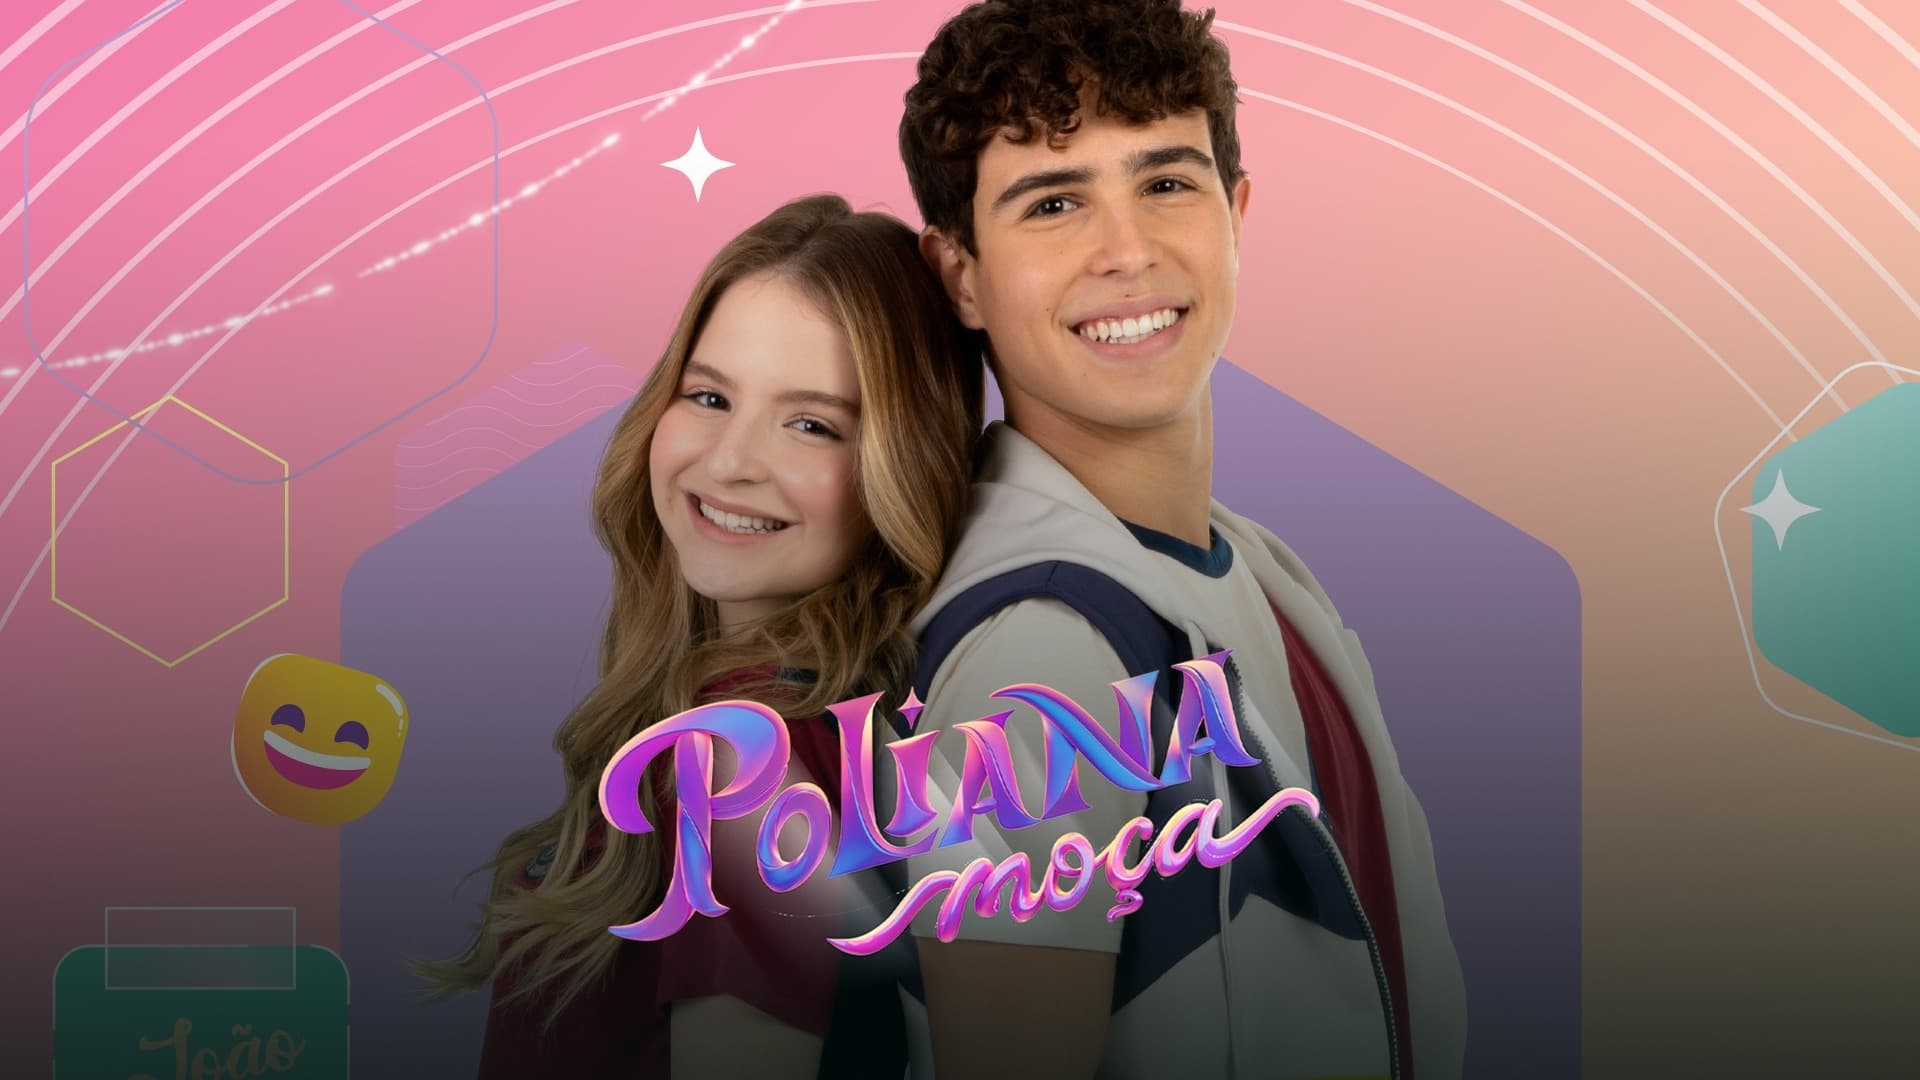 Poliana Moça - Season 1 Episode 7 : Episode 7